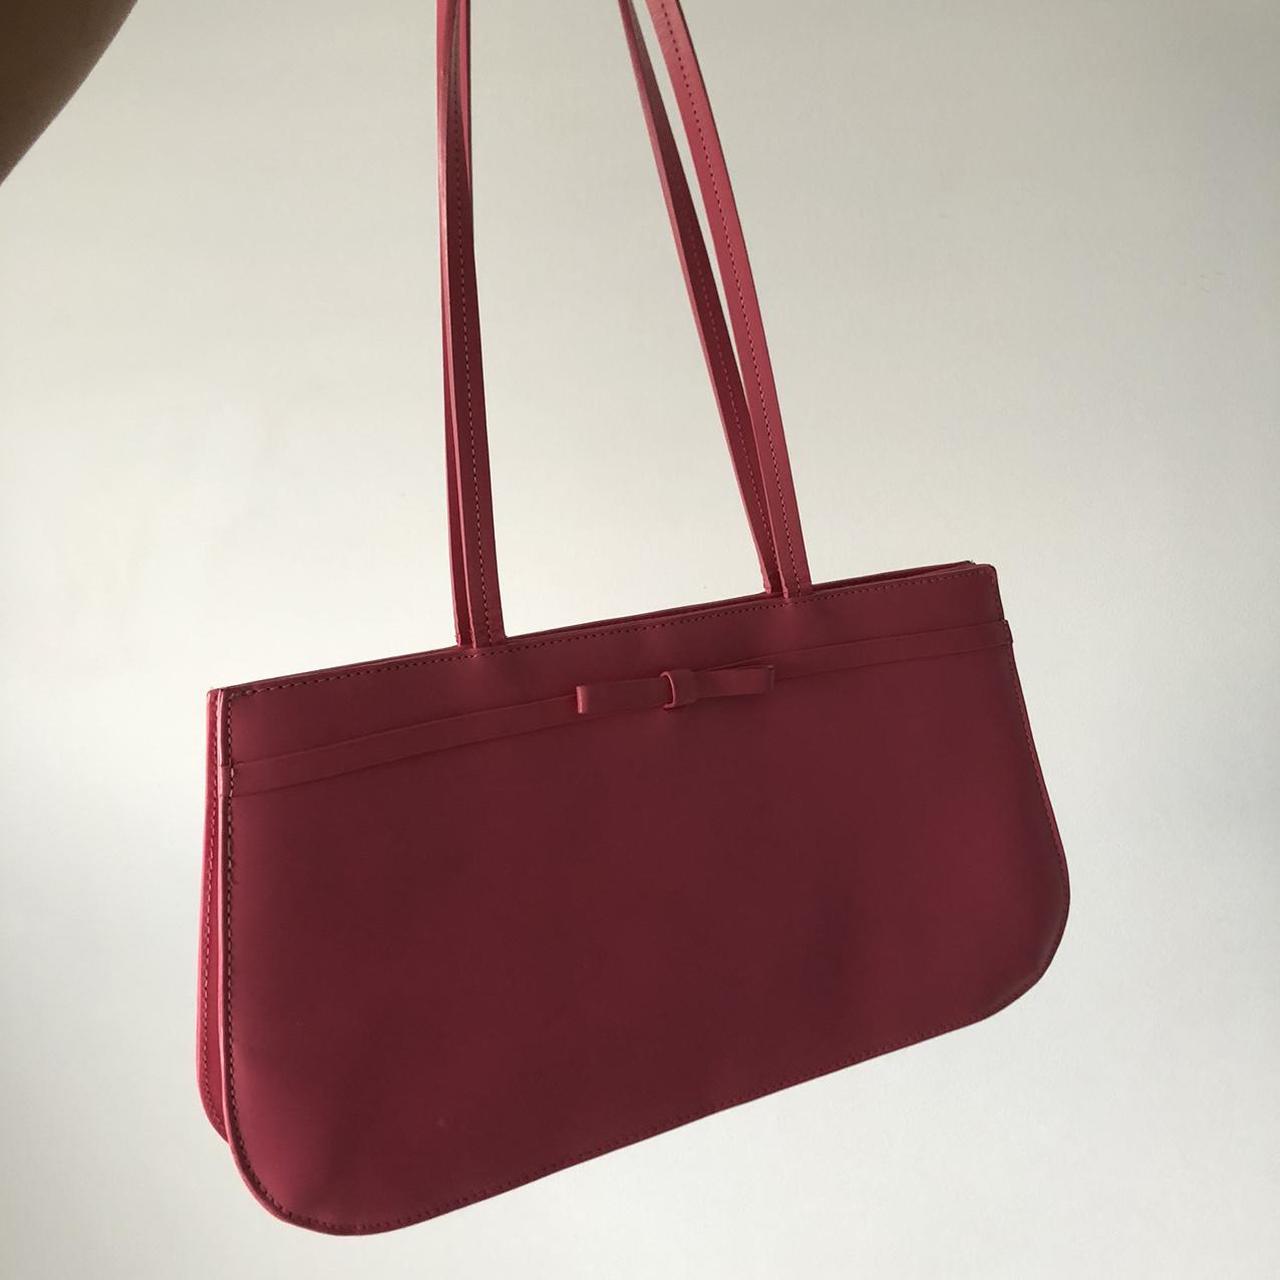 Product Image 1 - Talbots genuine leather shoulder bag.
Length-13
Height-